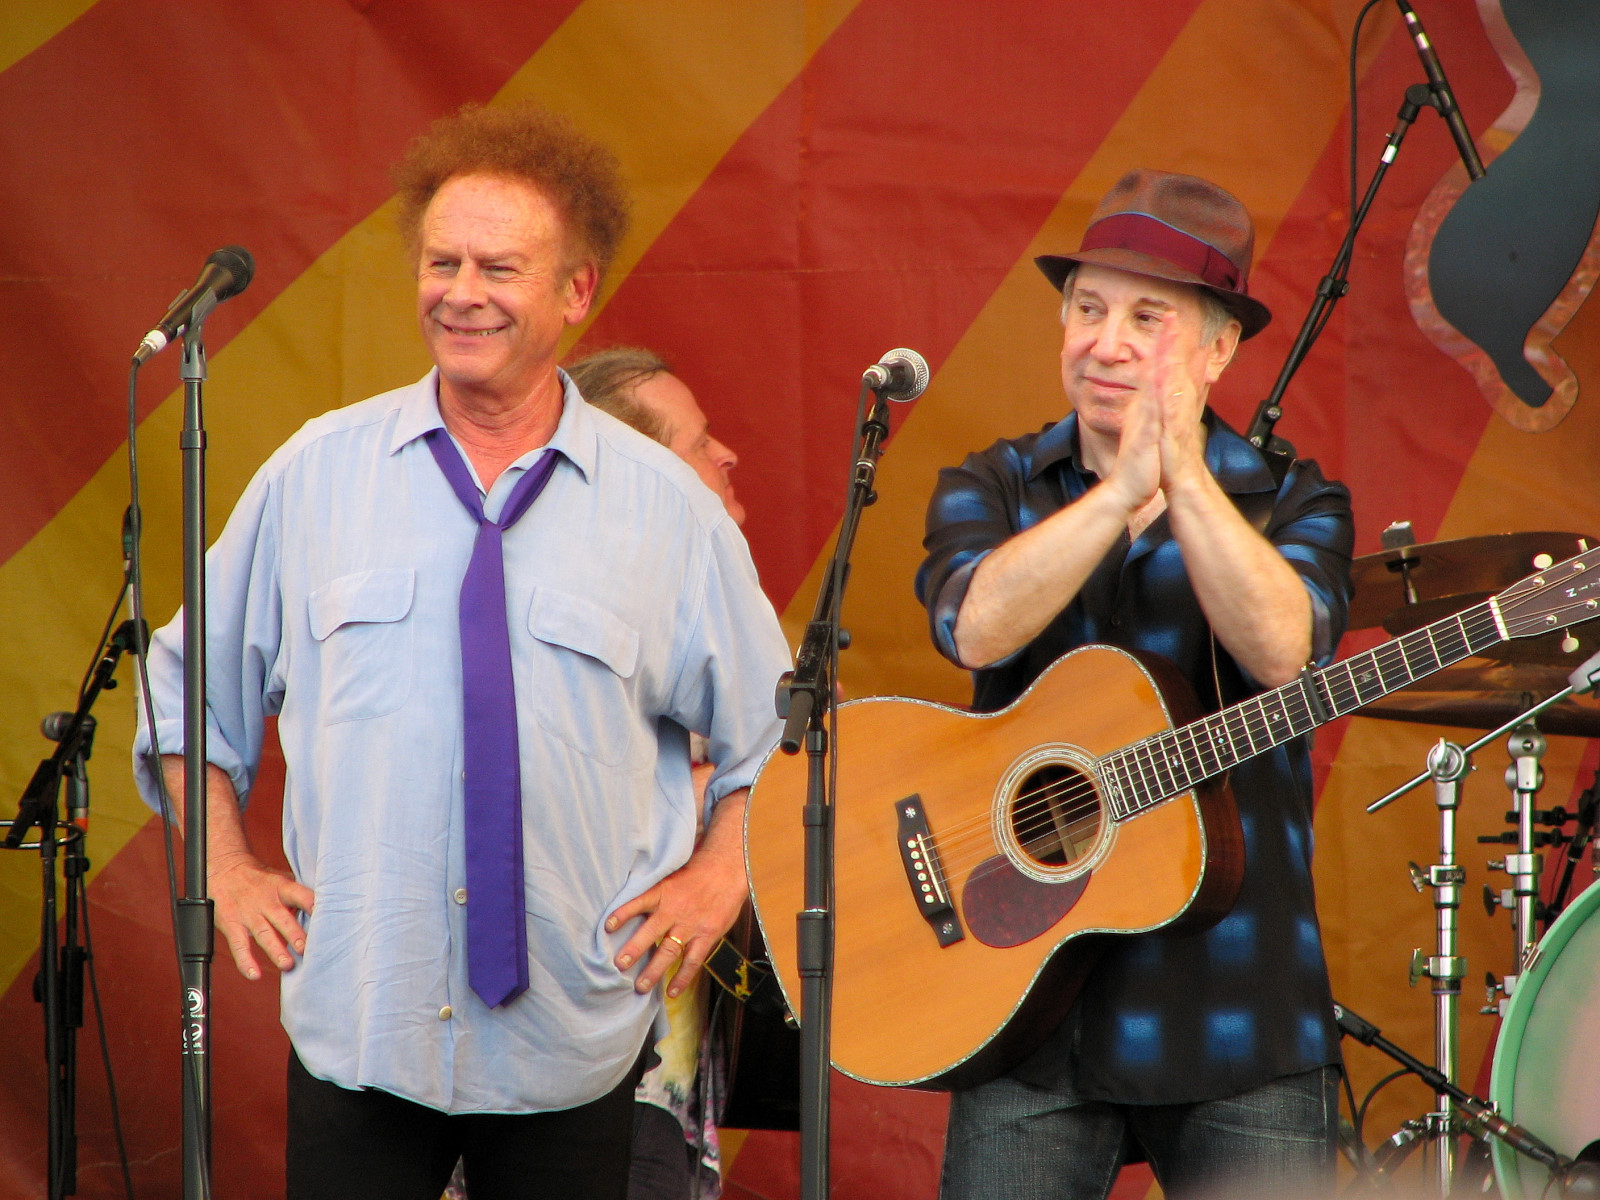 Simon & Garfunkel at Jazz Fest 2010